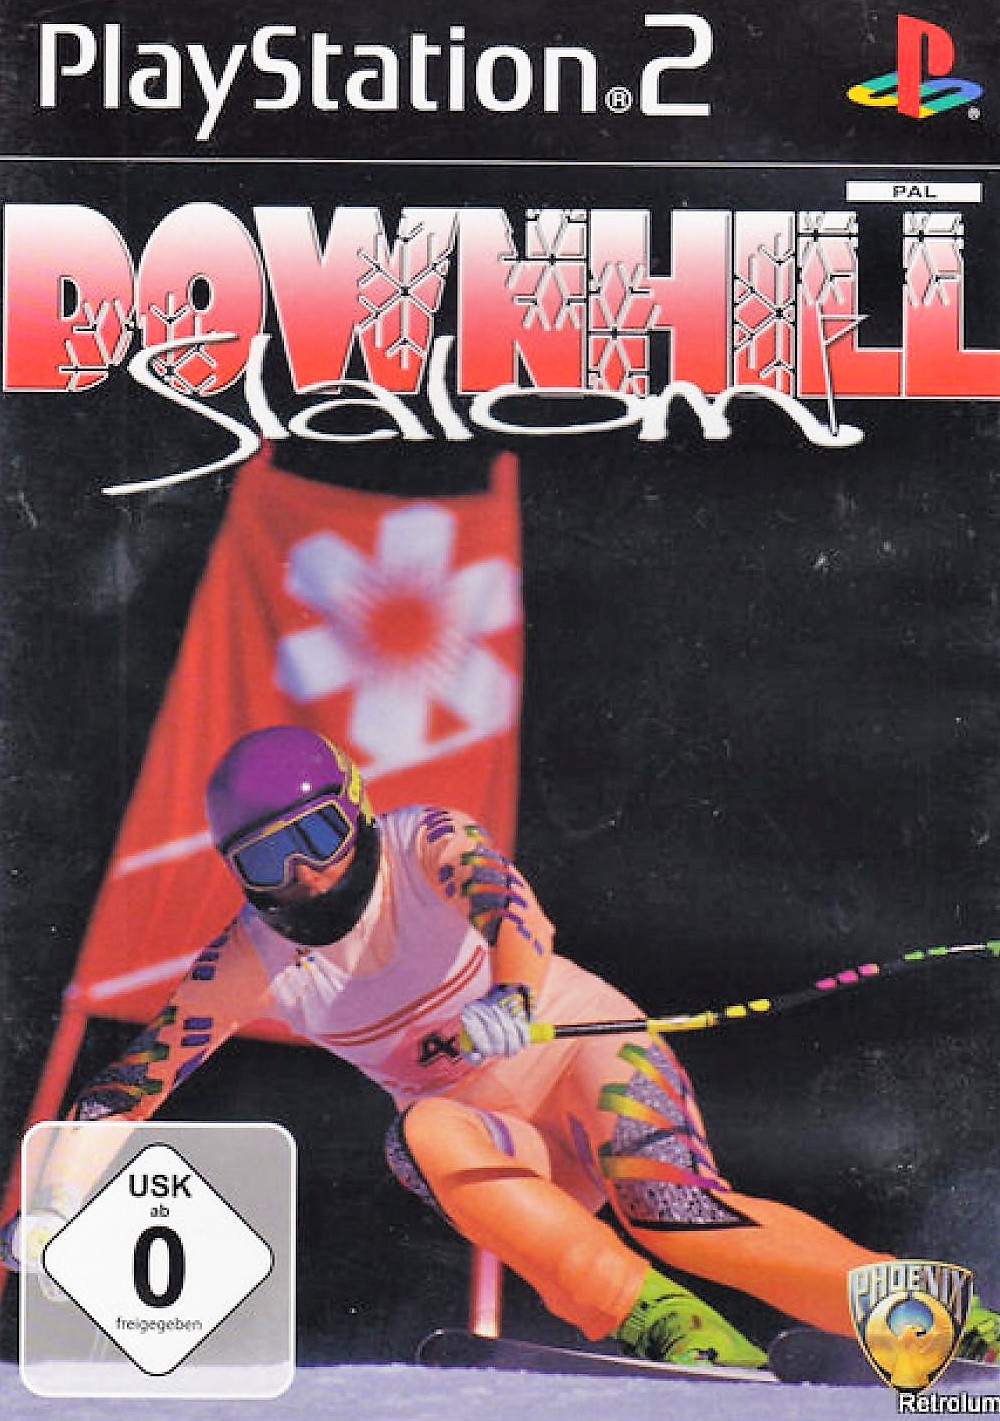 Downhill Slalom